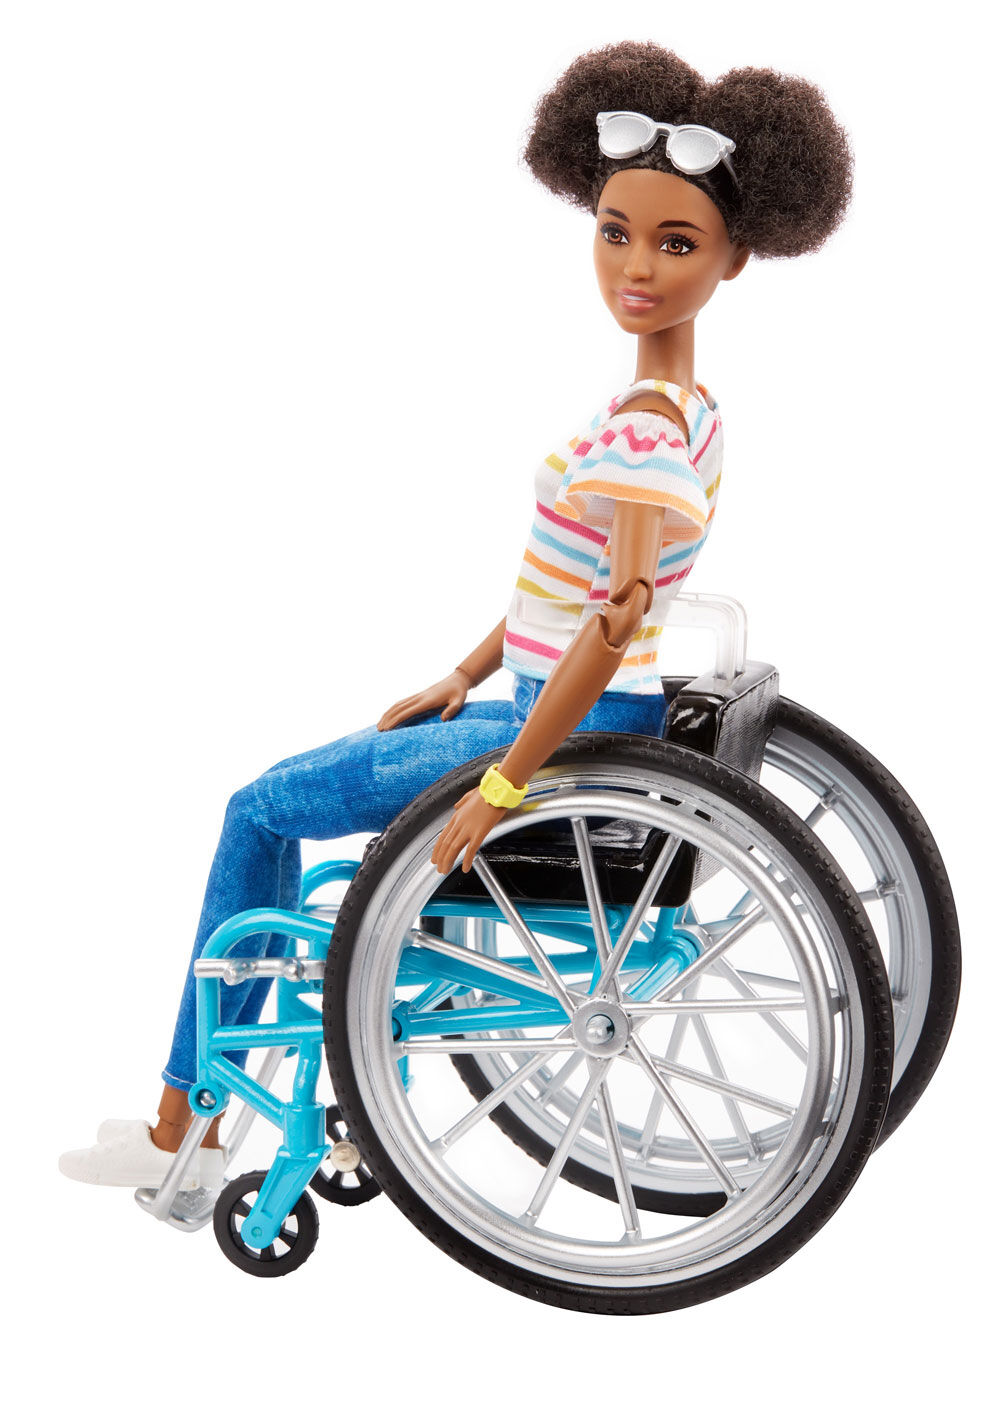 new barbie wheelchair